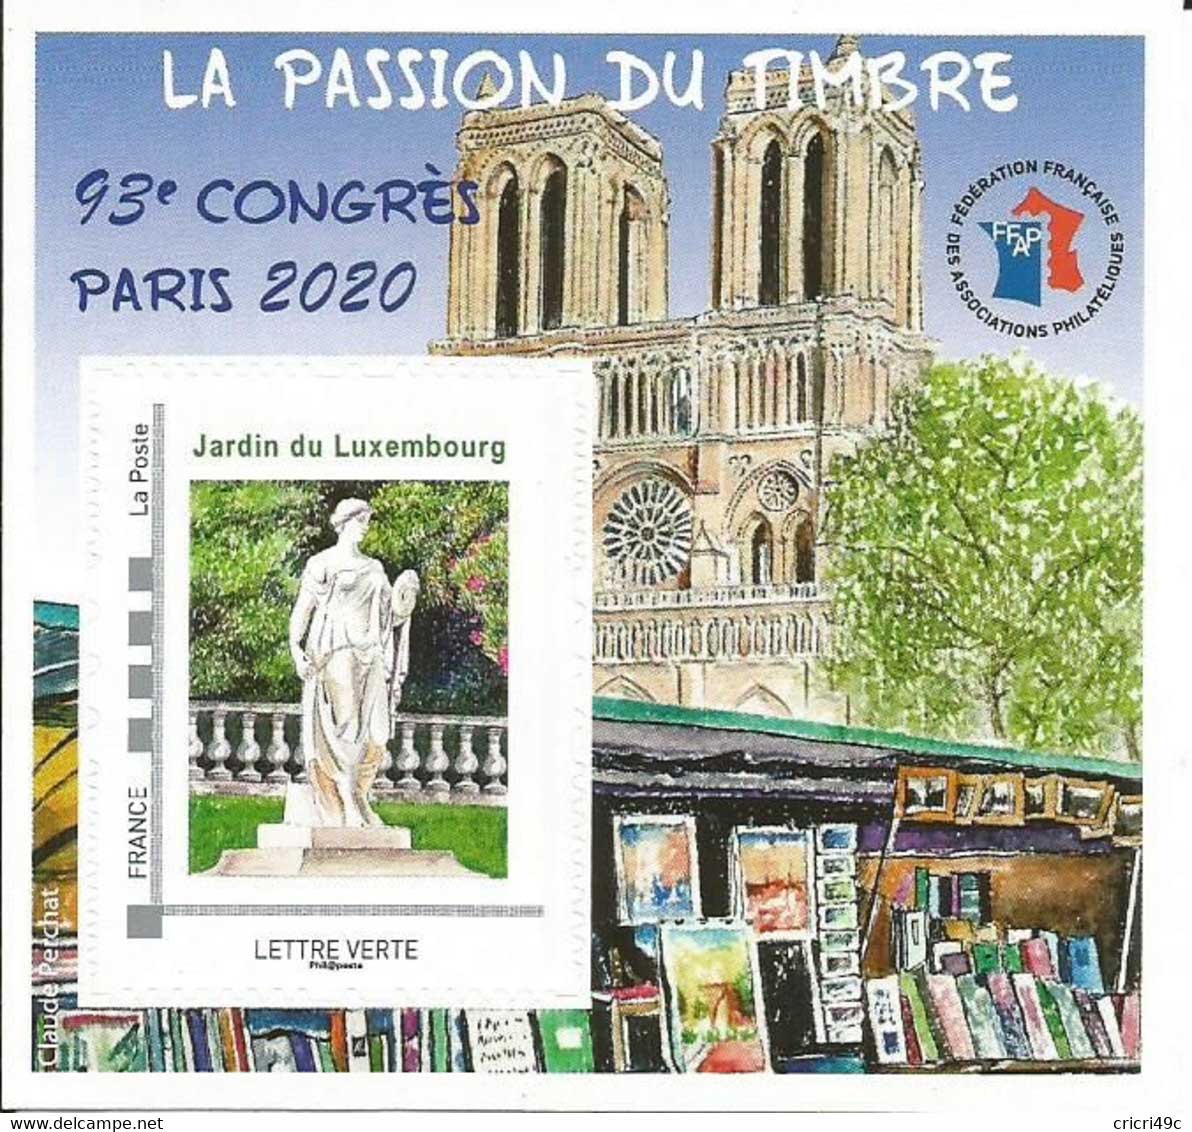 La Passion du Timbre - 93e Congrès de la F.F.A.P. - Paris 2020